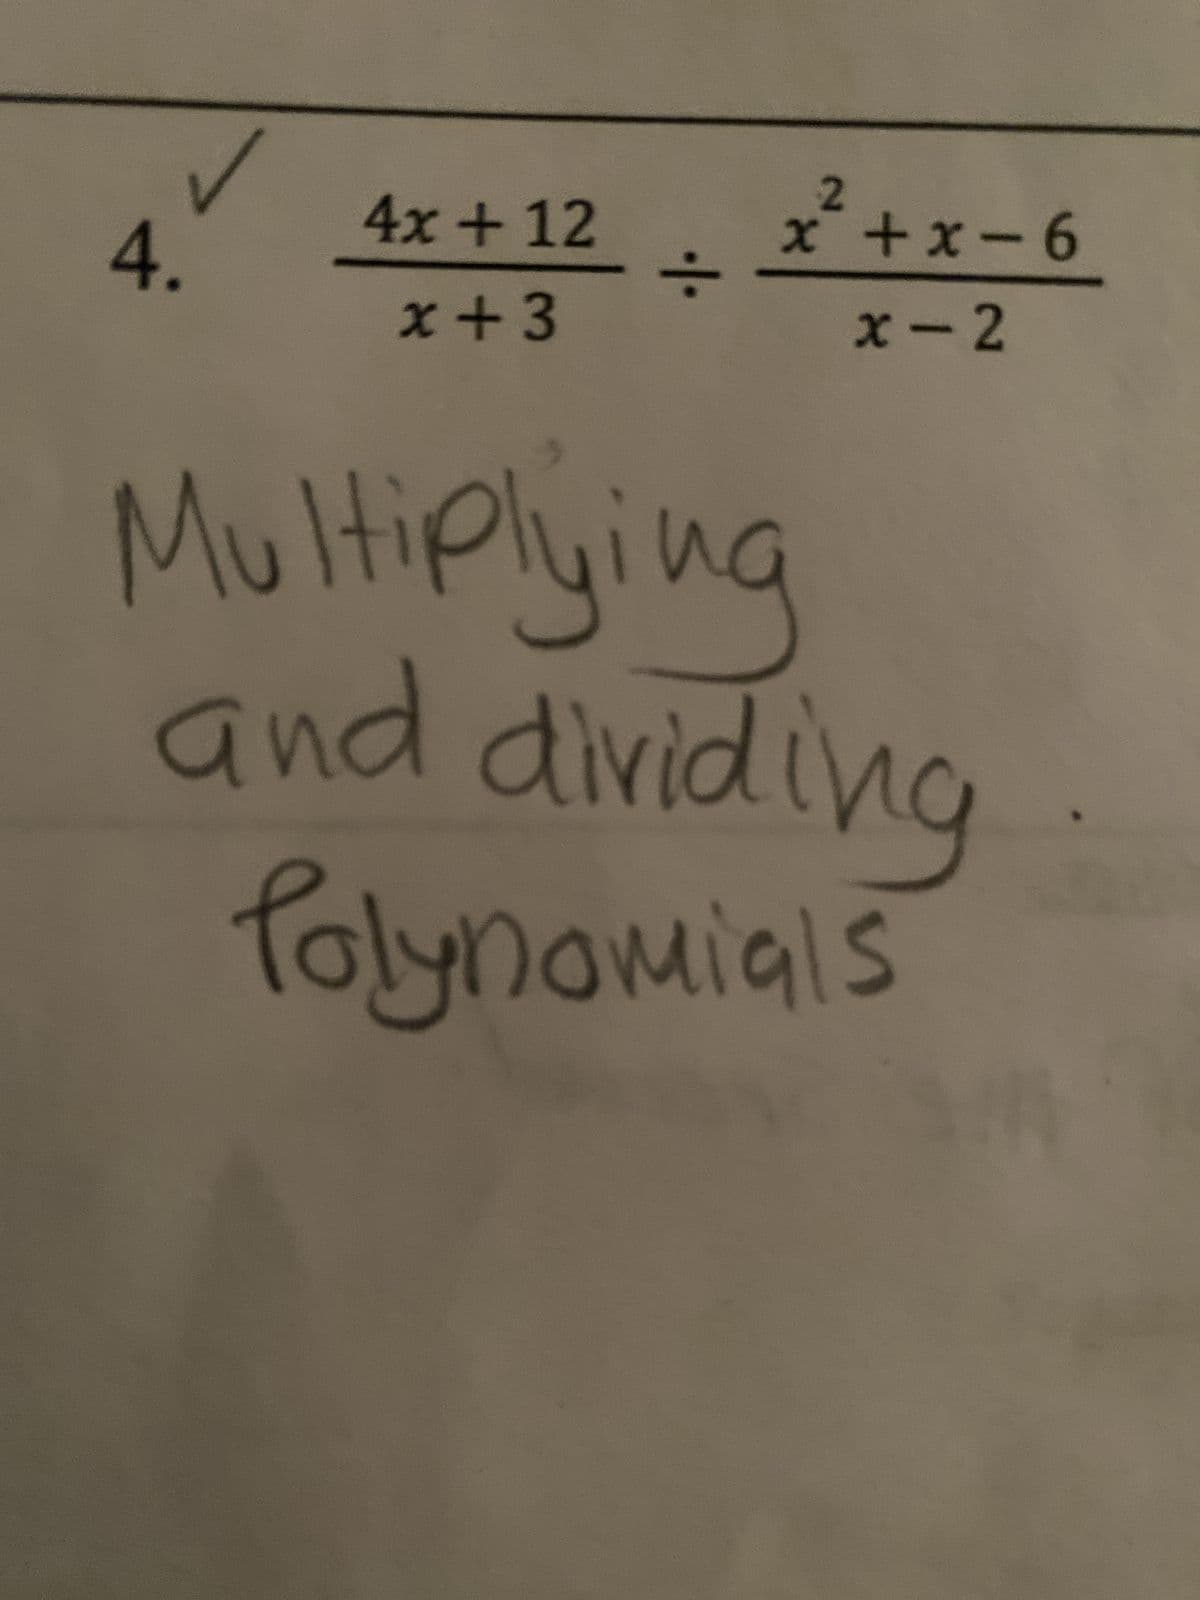 4.
4x + 12
x+3
÷
x²+x-6
x-2
Multiplying
and dividing
Polynomials